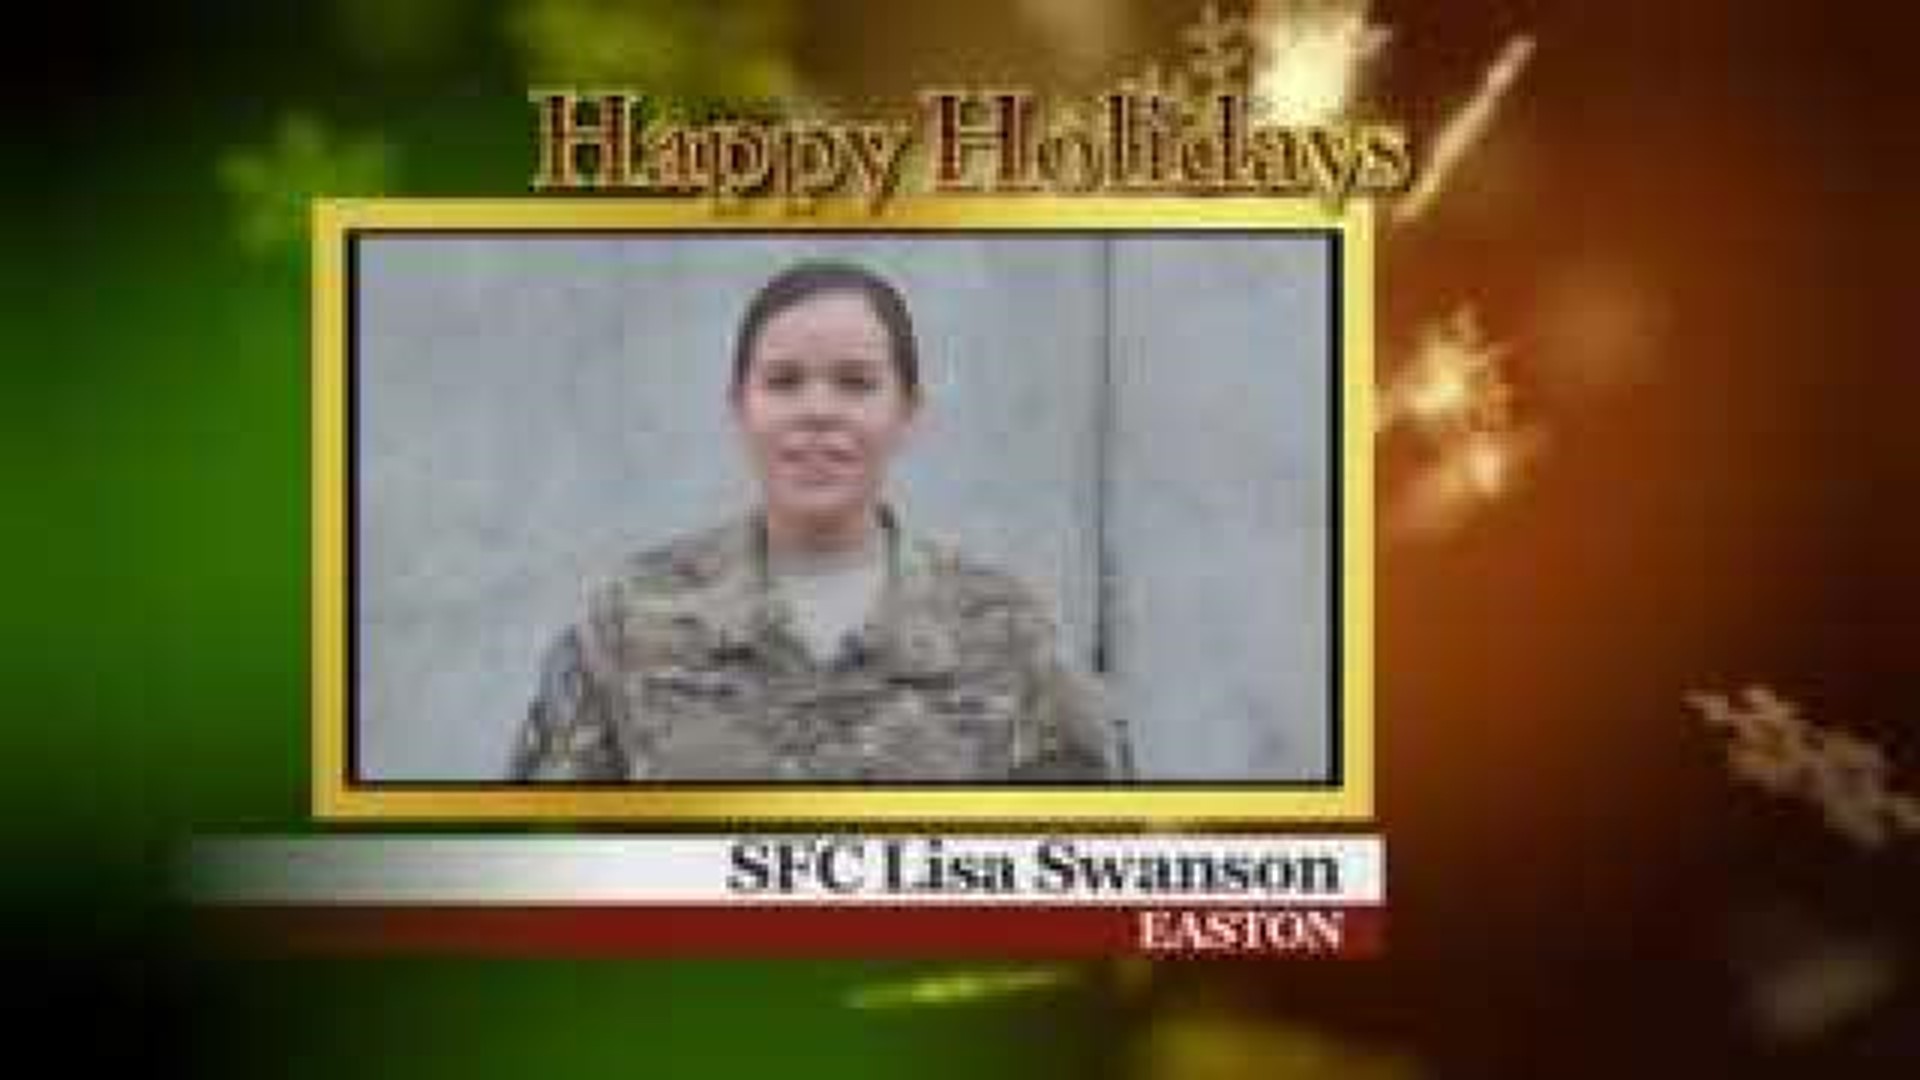 Military Greeting: SFC Lisa Swanson